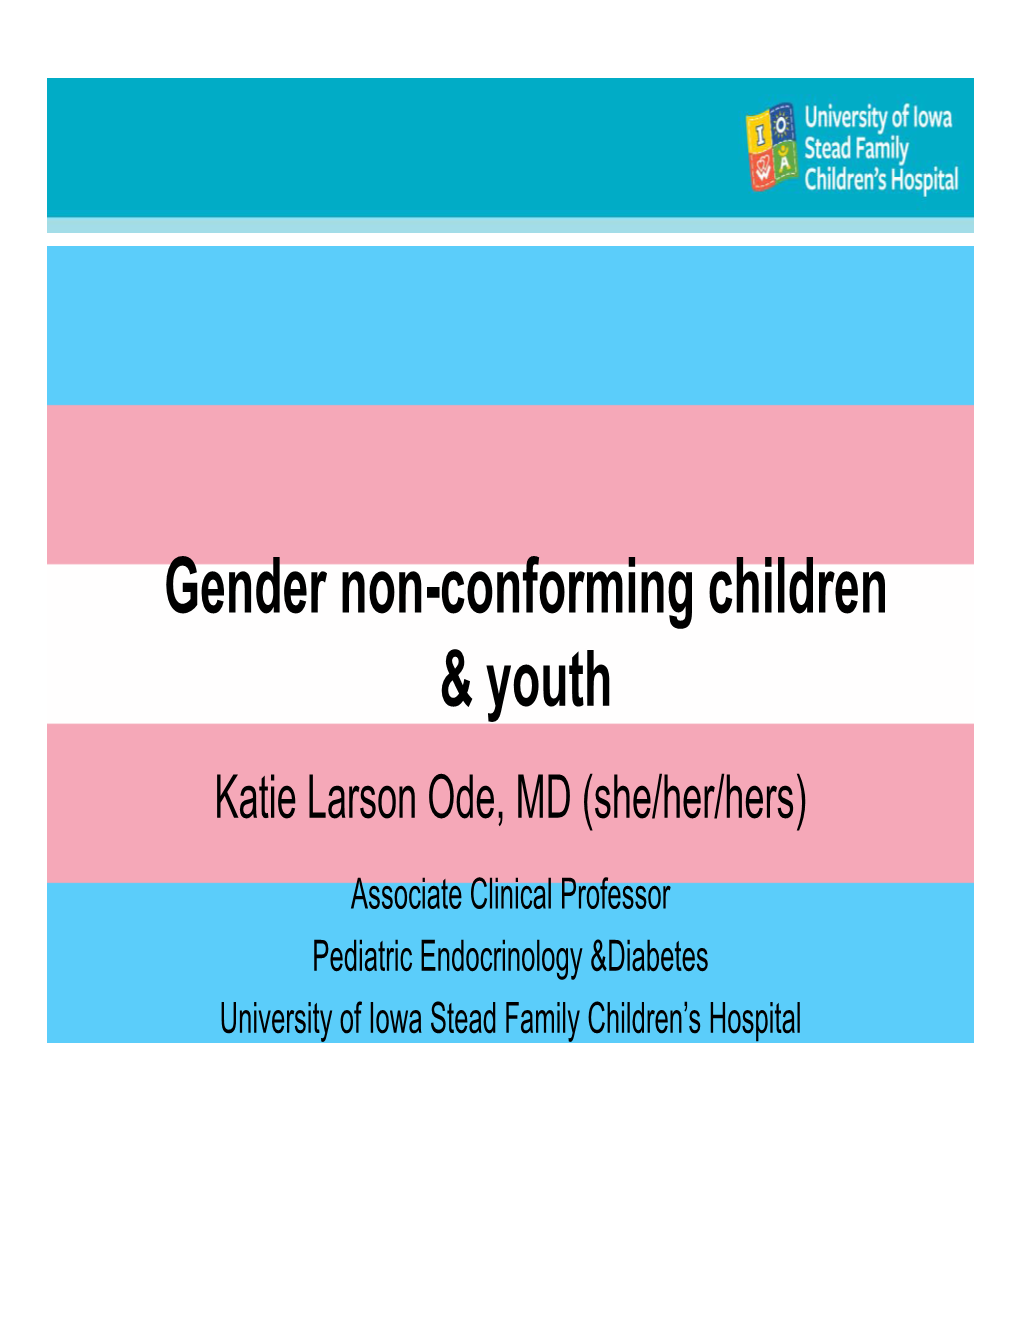 Gender Non-Conforming Children & Youth